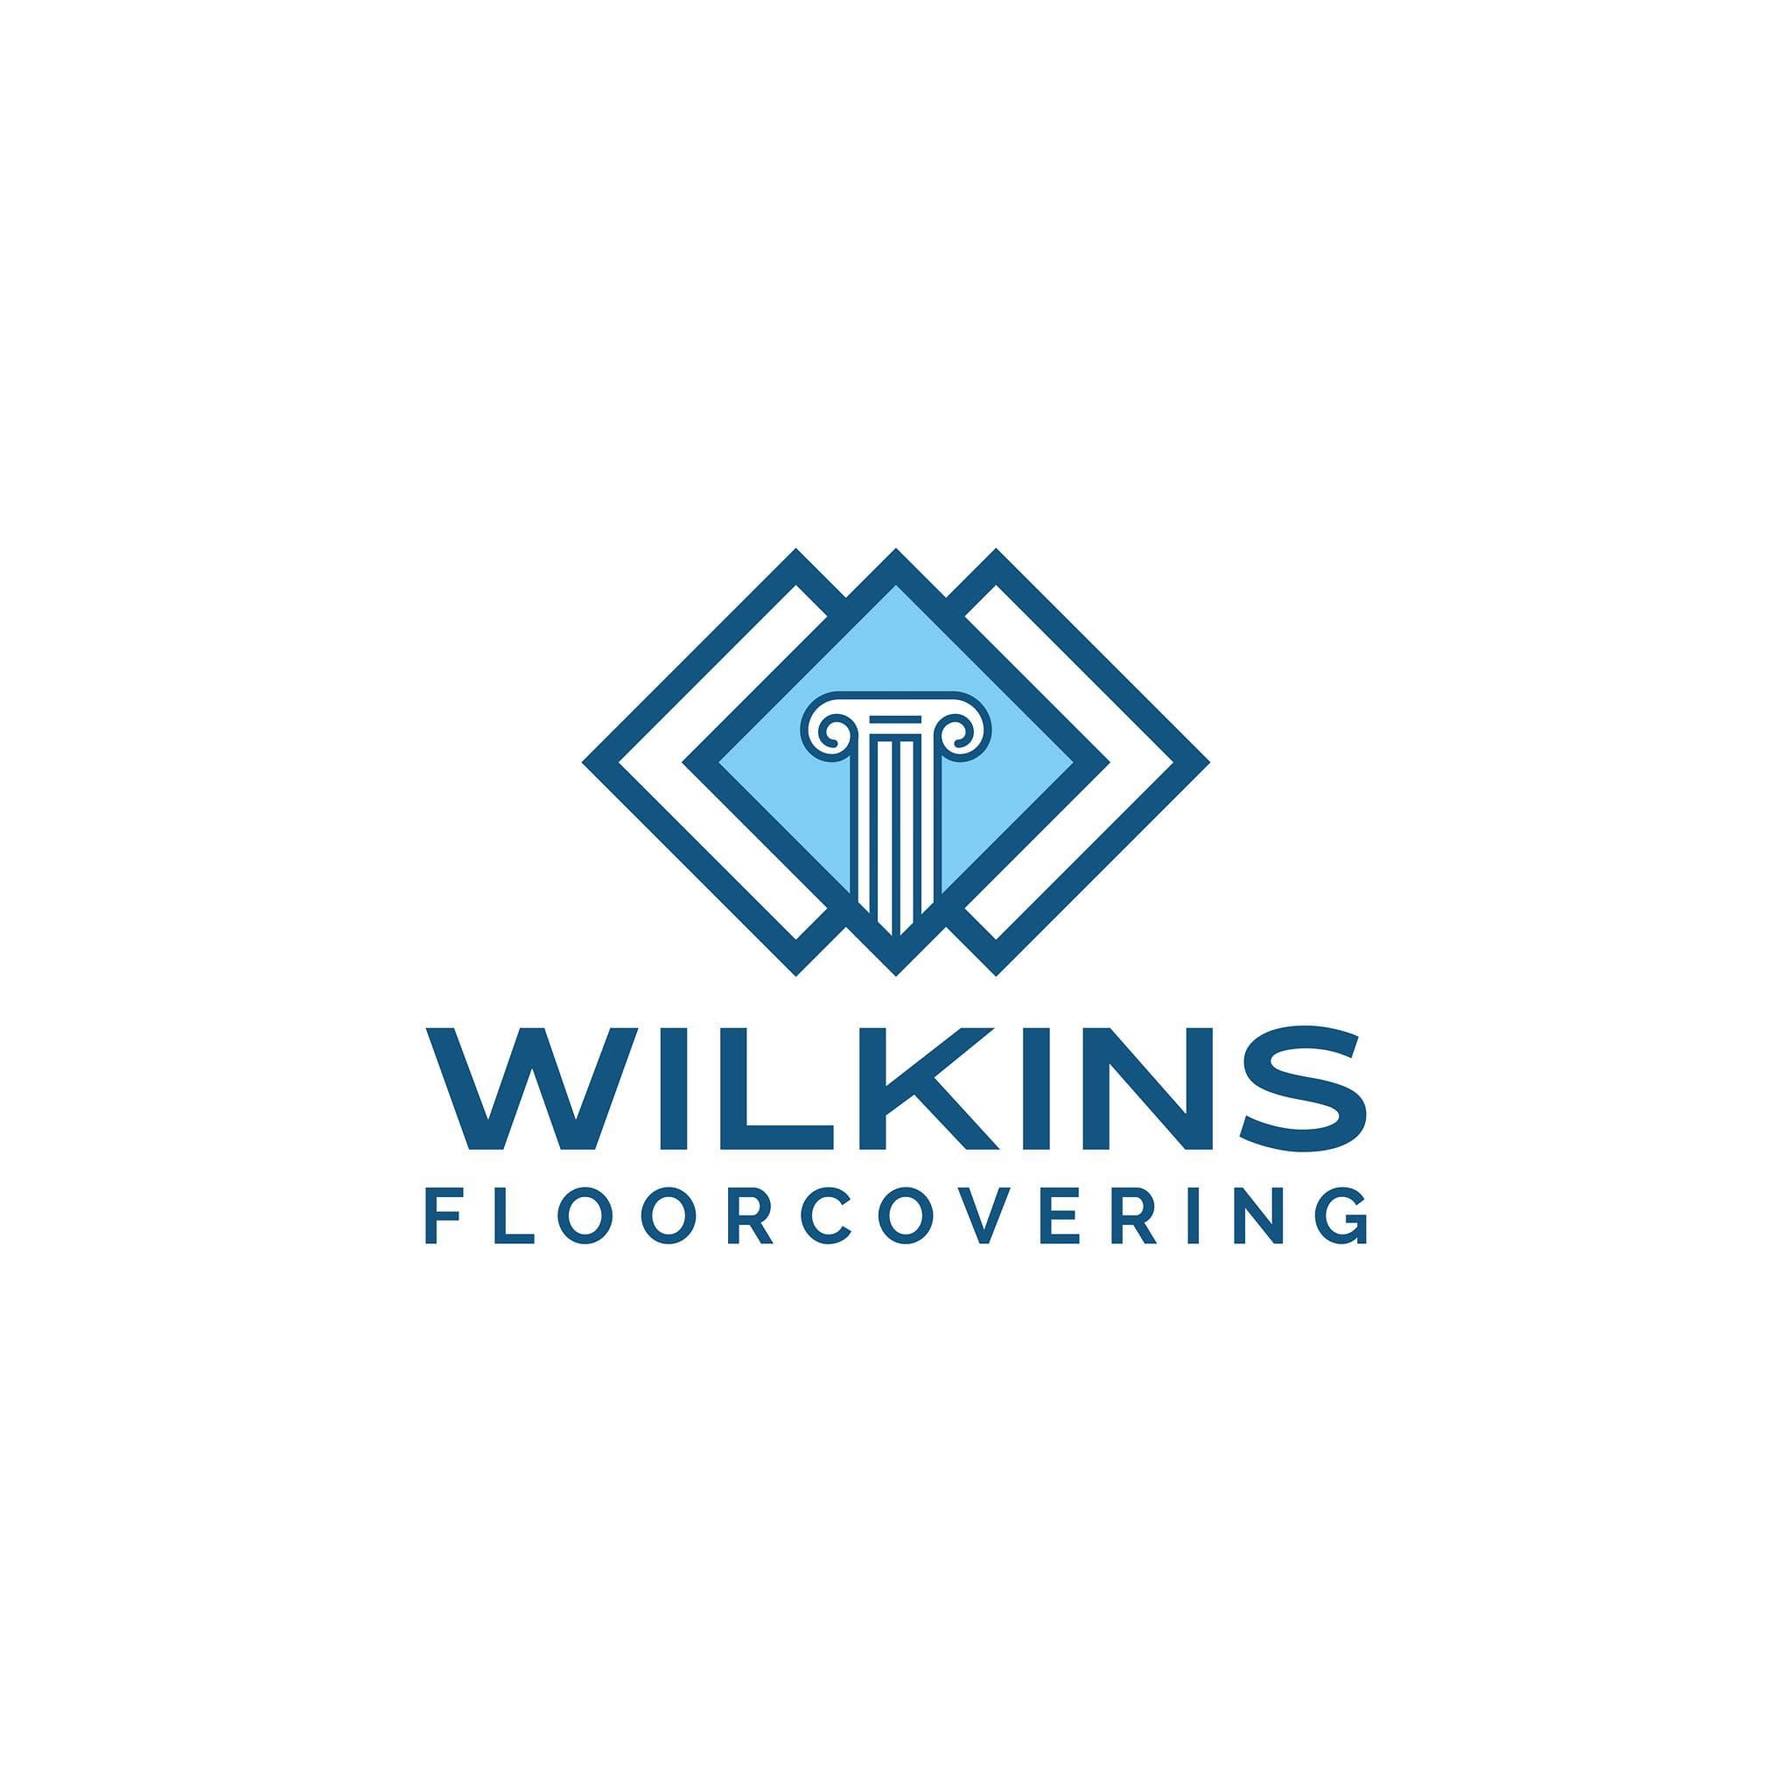 Wilkins Floorcovering